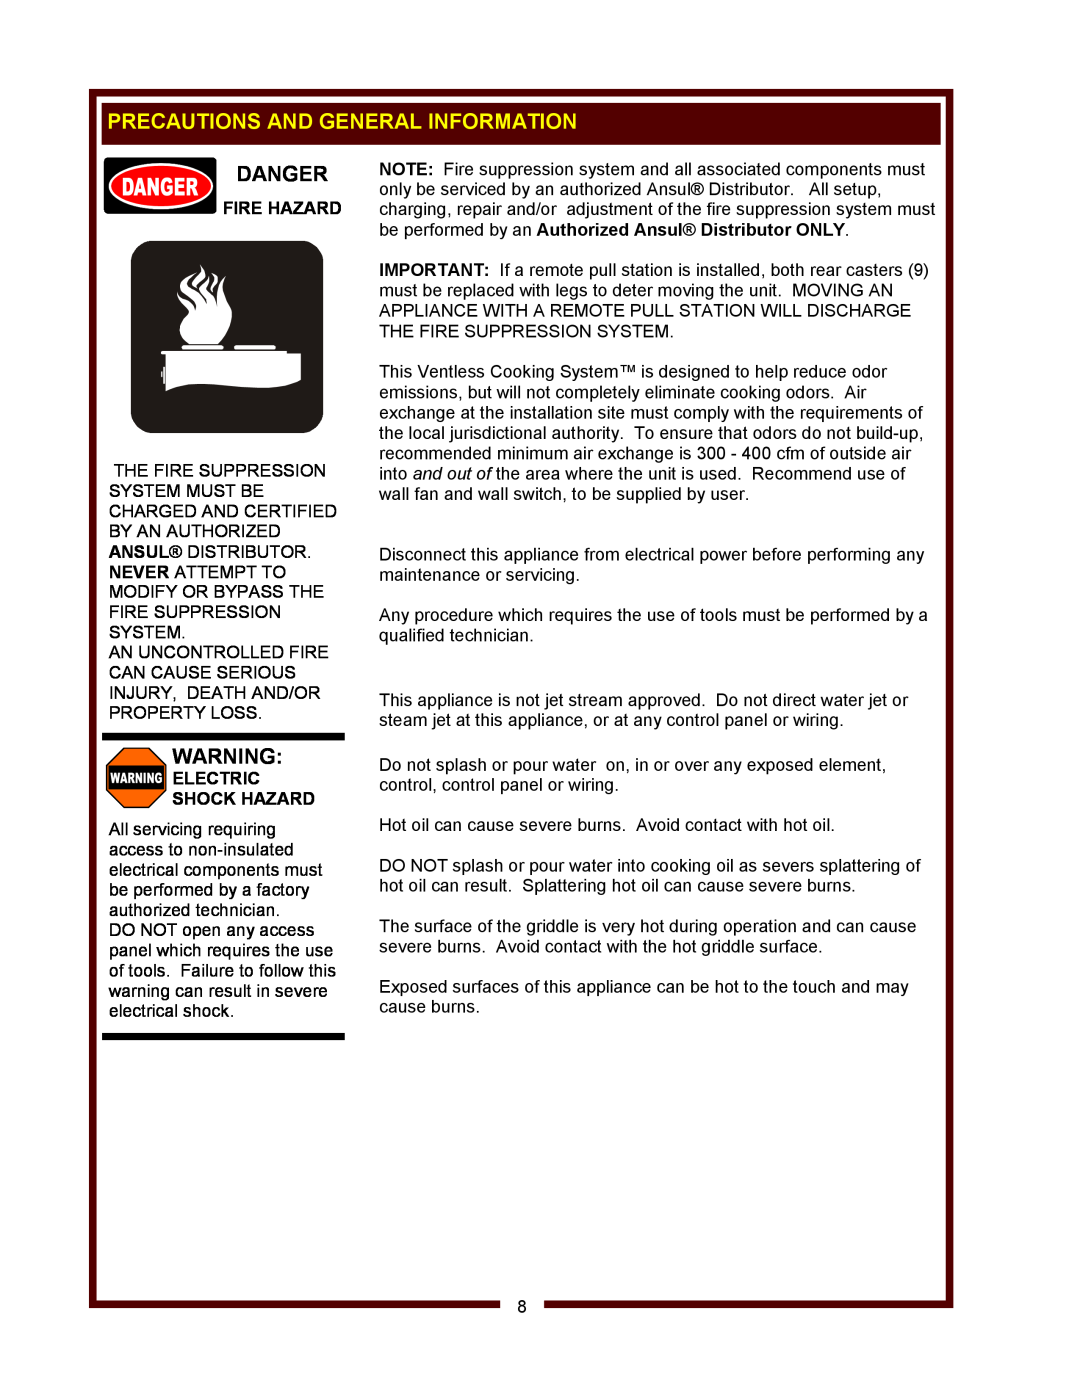 Wells WV-FGRW operation manual Precautions And General Information, Danger, Fire Hazard, Electric Shock Hazard 